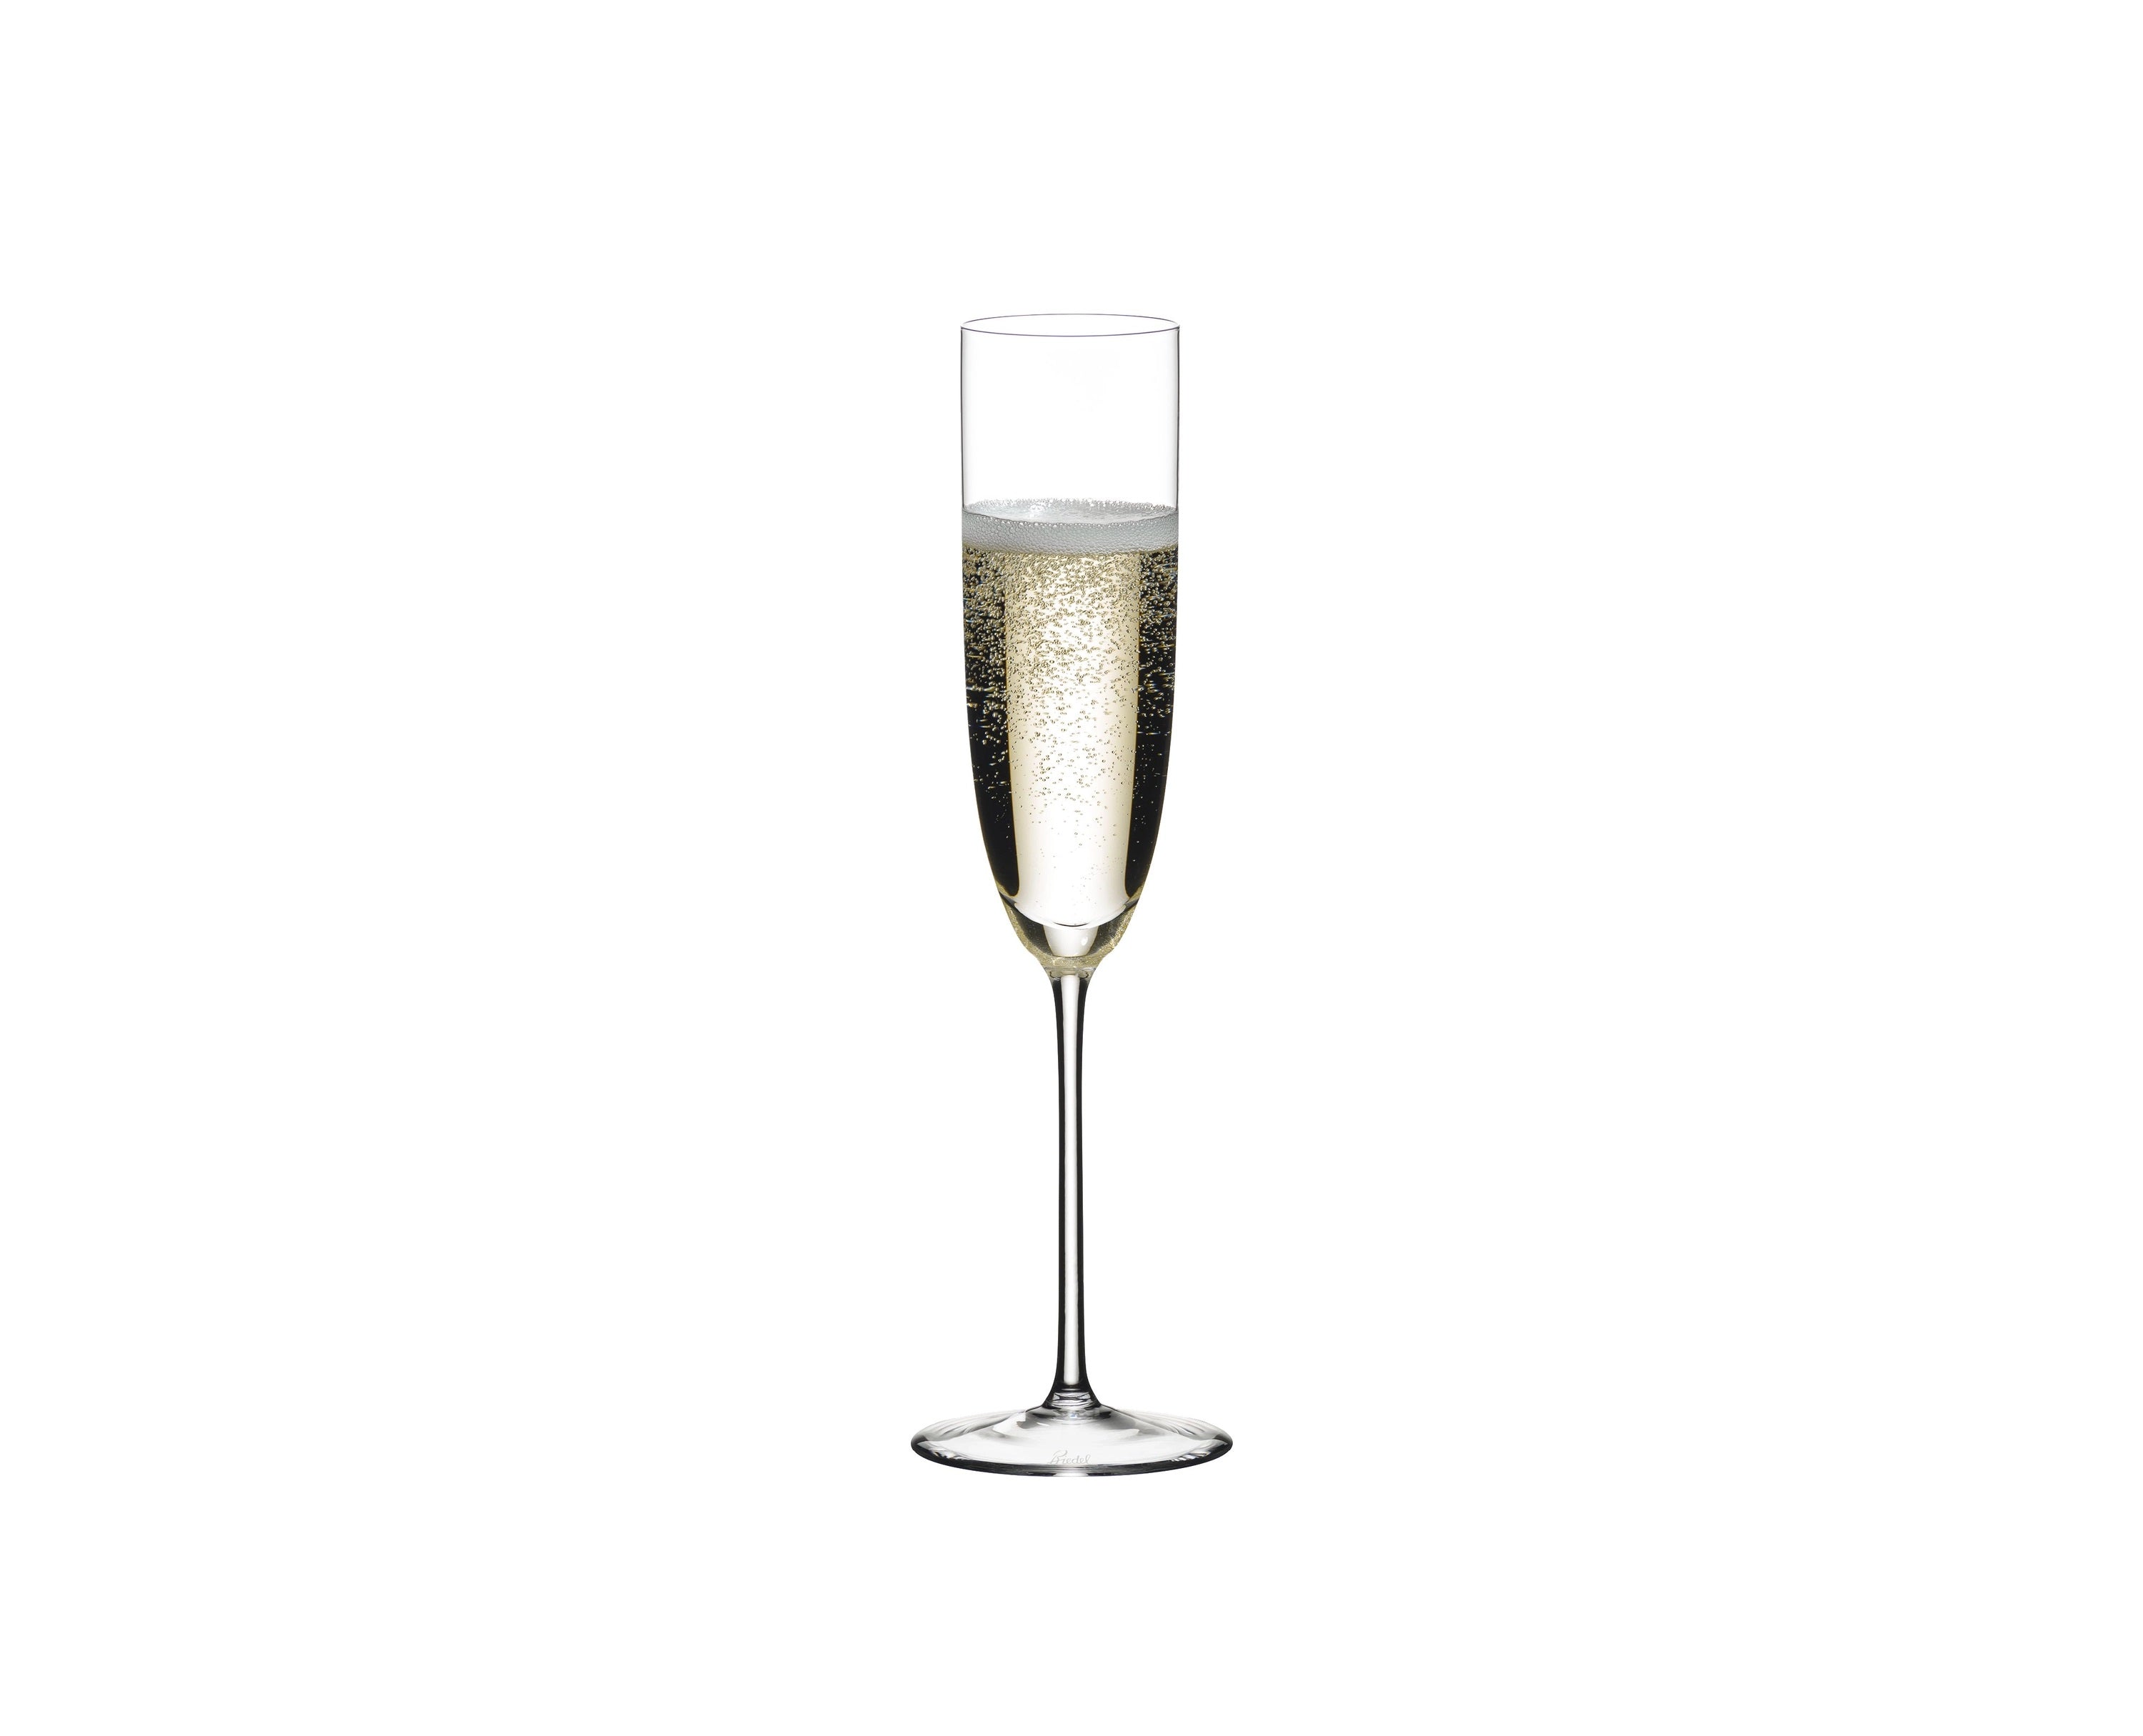 Riedel Sommeliers Kelch Champagnerglas, 4er-Set